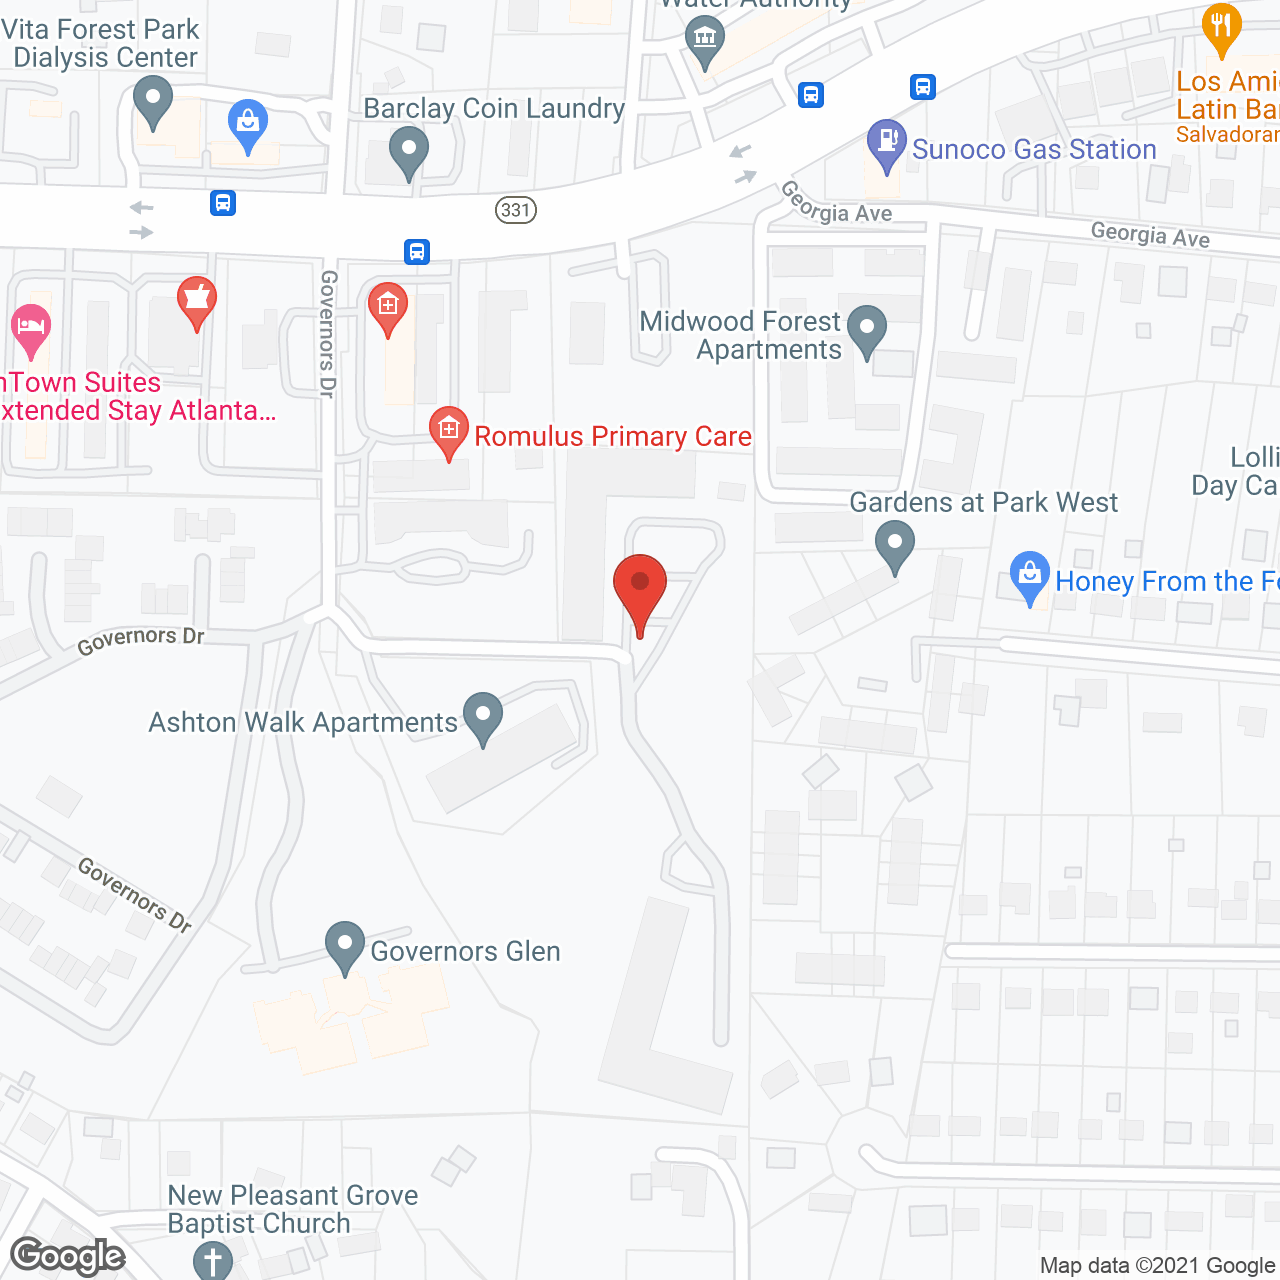 Ashton Walk Apartments in google map